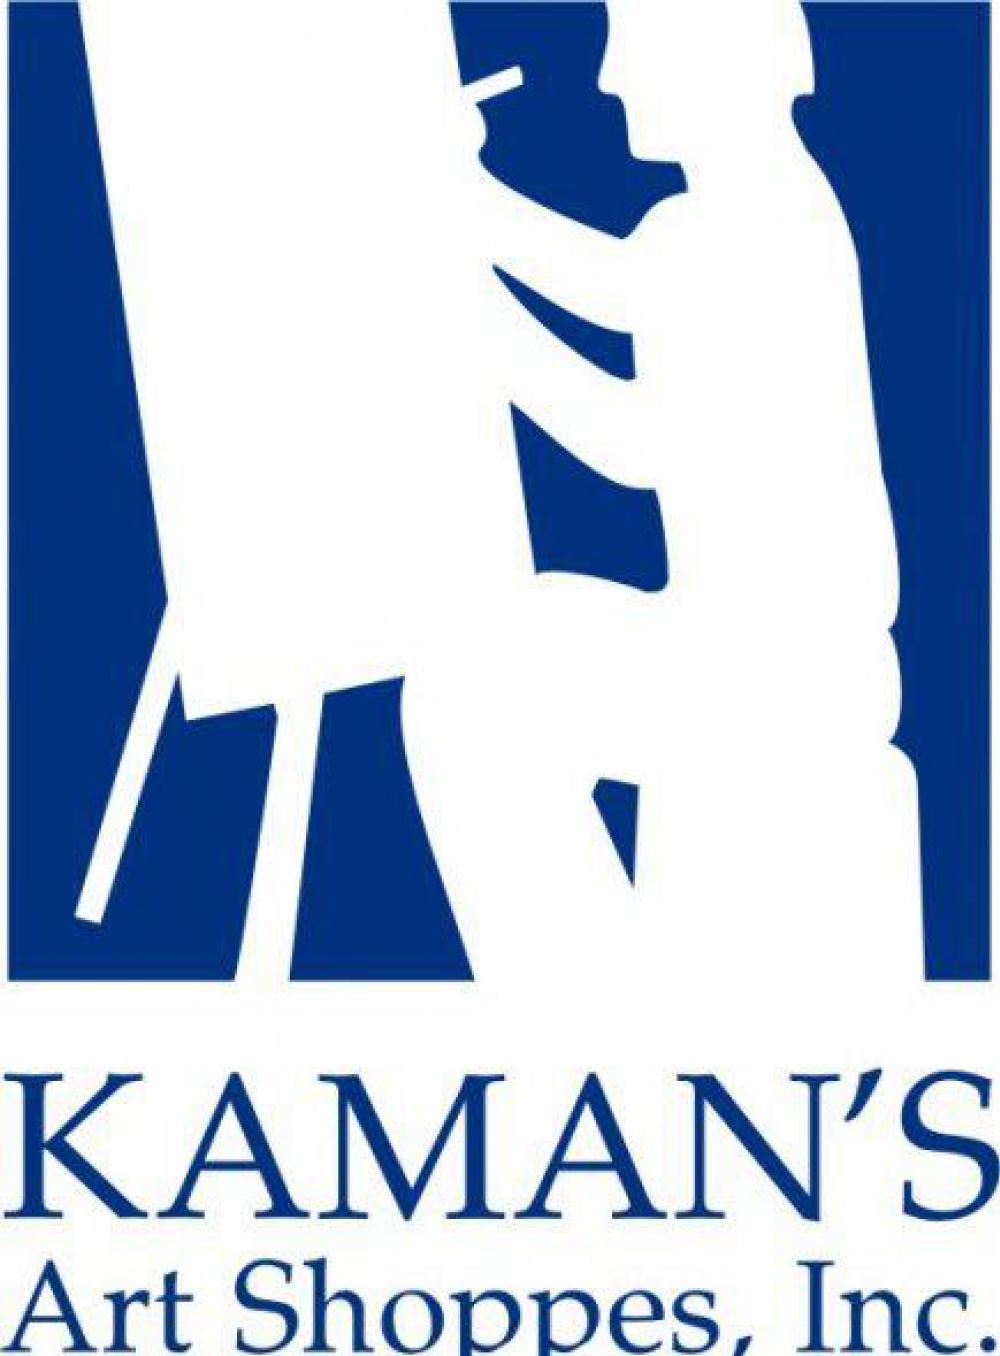 Kaman’s Art Shoppes, Inc.